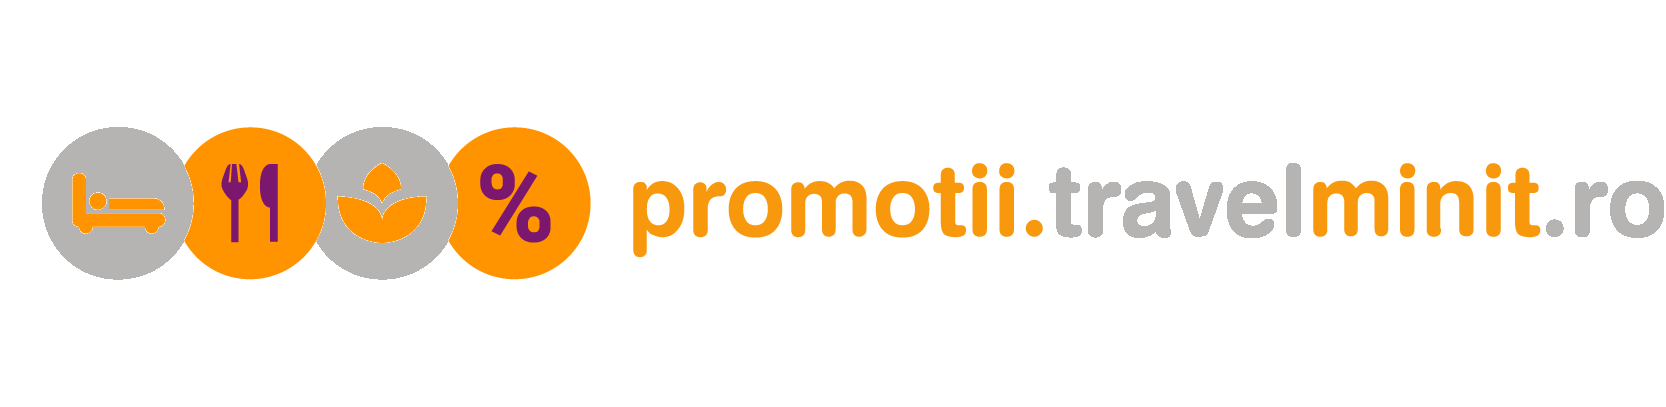 promotii-travelminit.ro